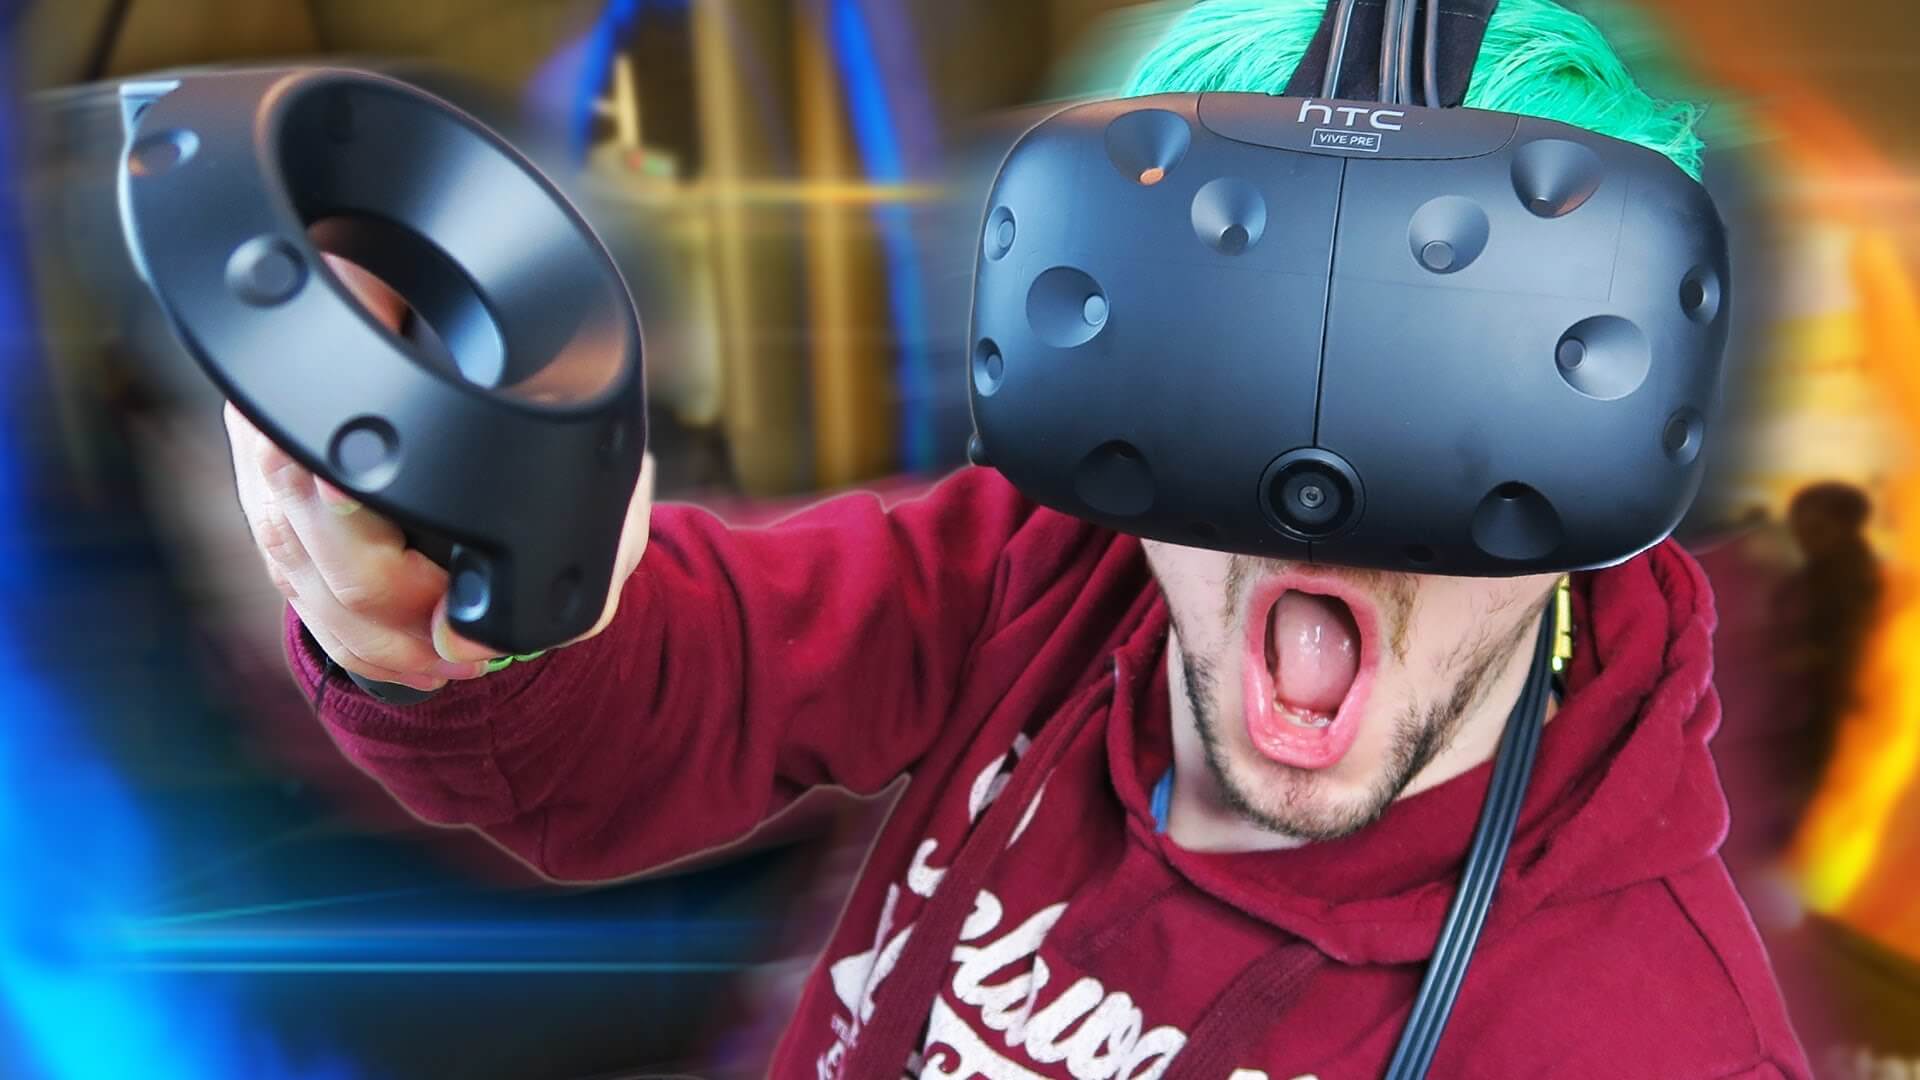 Vr parody. Шлем vr50. VR аттракцион Окулус 2. Шлем виртуальной реальности. Ребенок в шлеме виртуальной реальности.